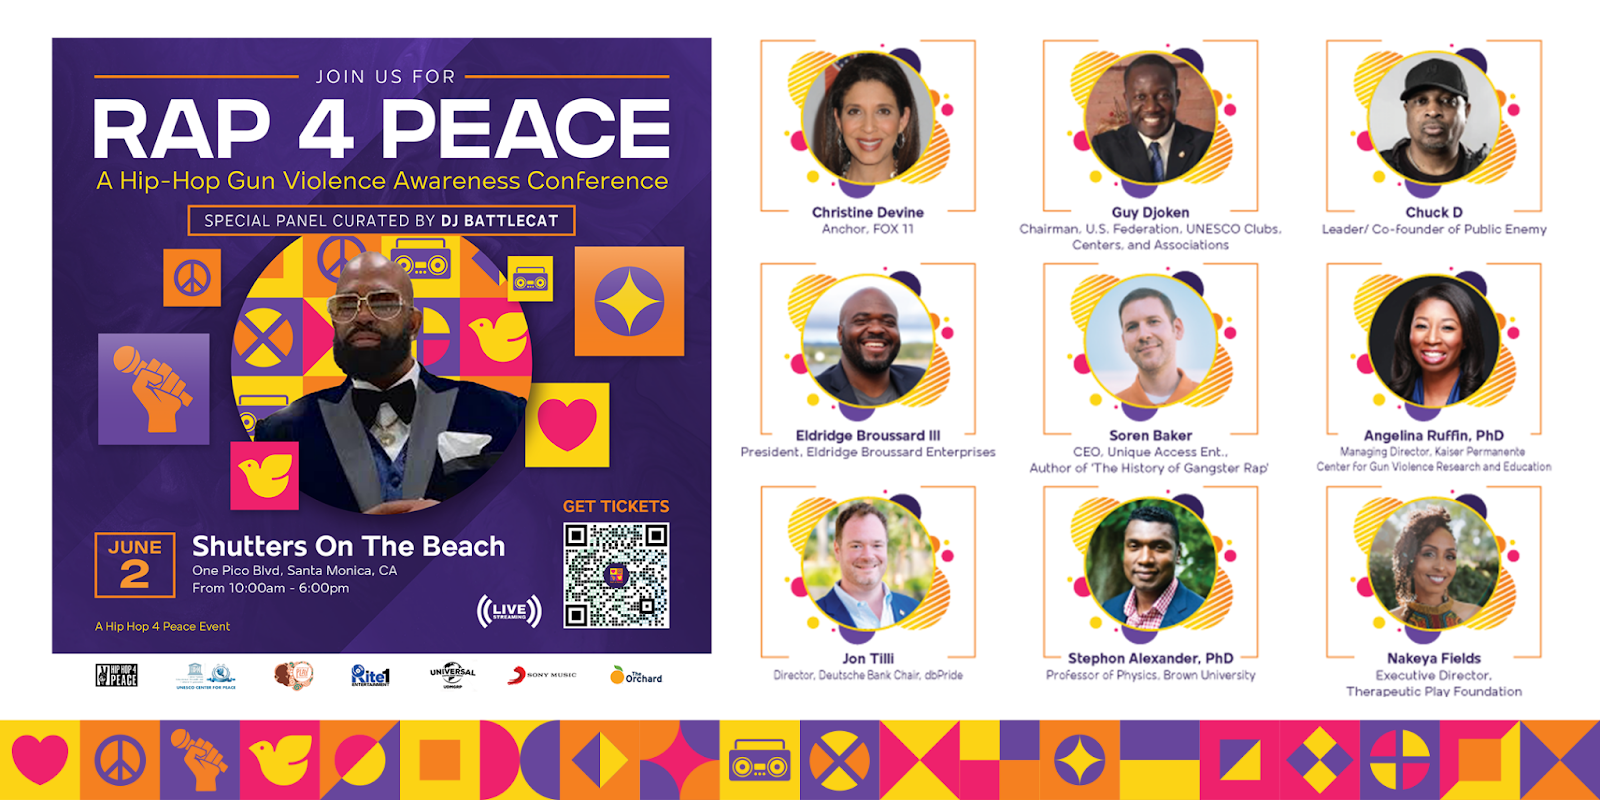 Hip Hop 4 Peace Joins UNESCO for "Rap 4 Peace" Conference Addressing Gun Violence Awareness